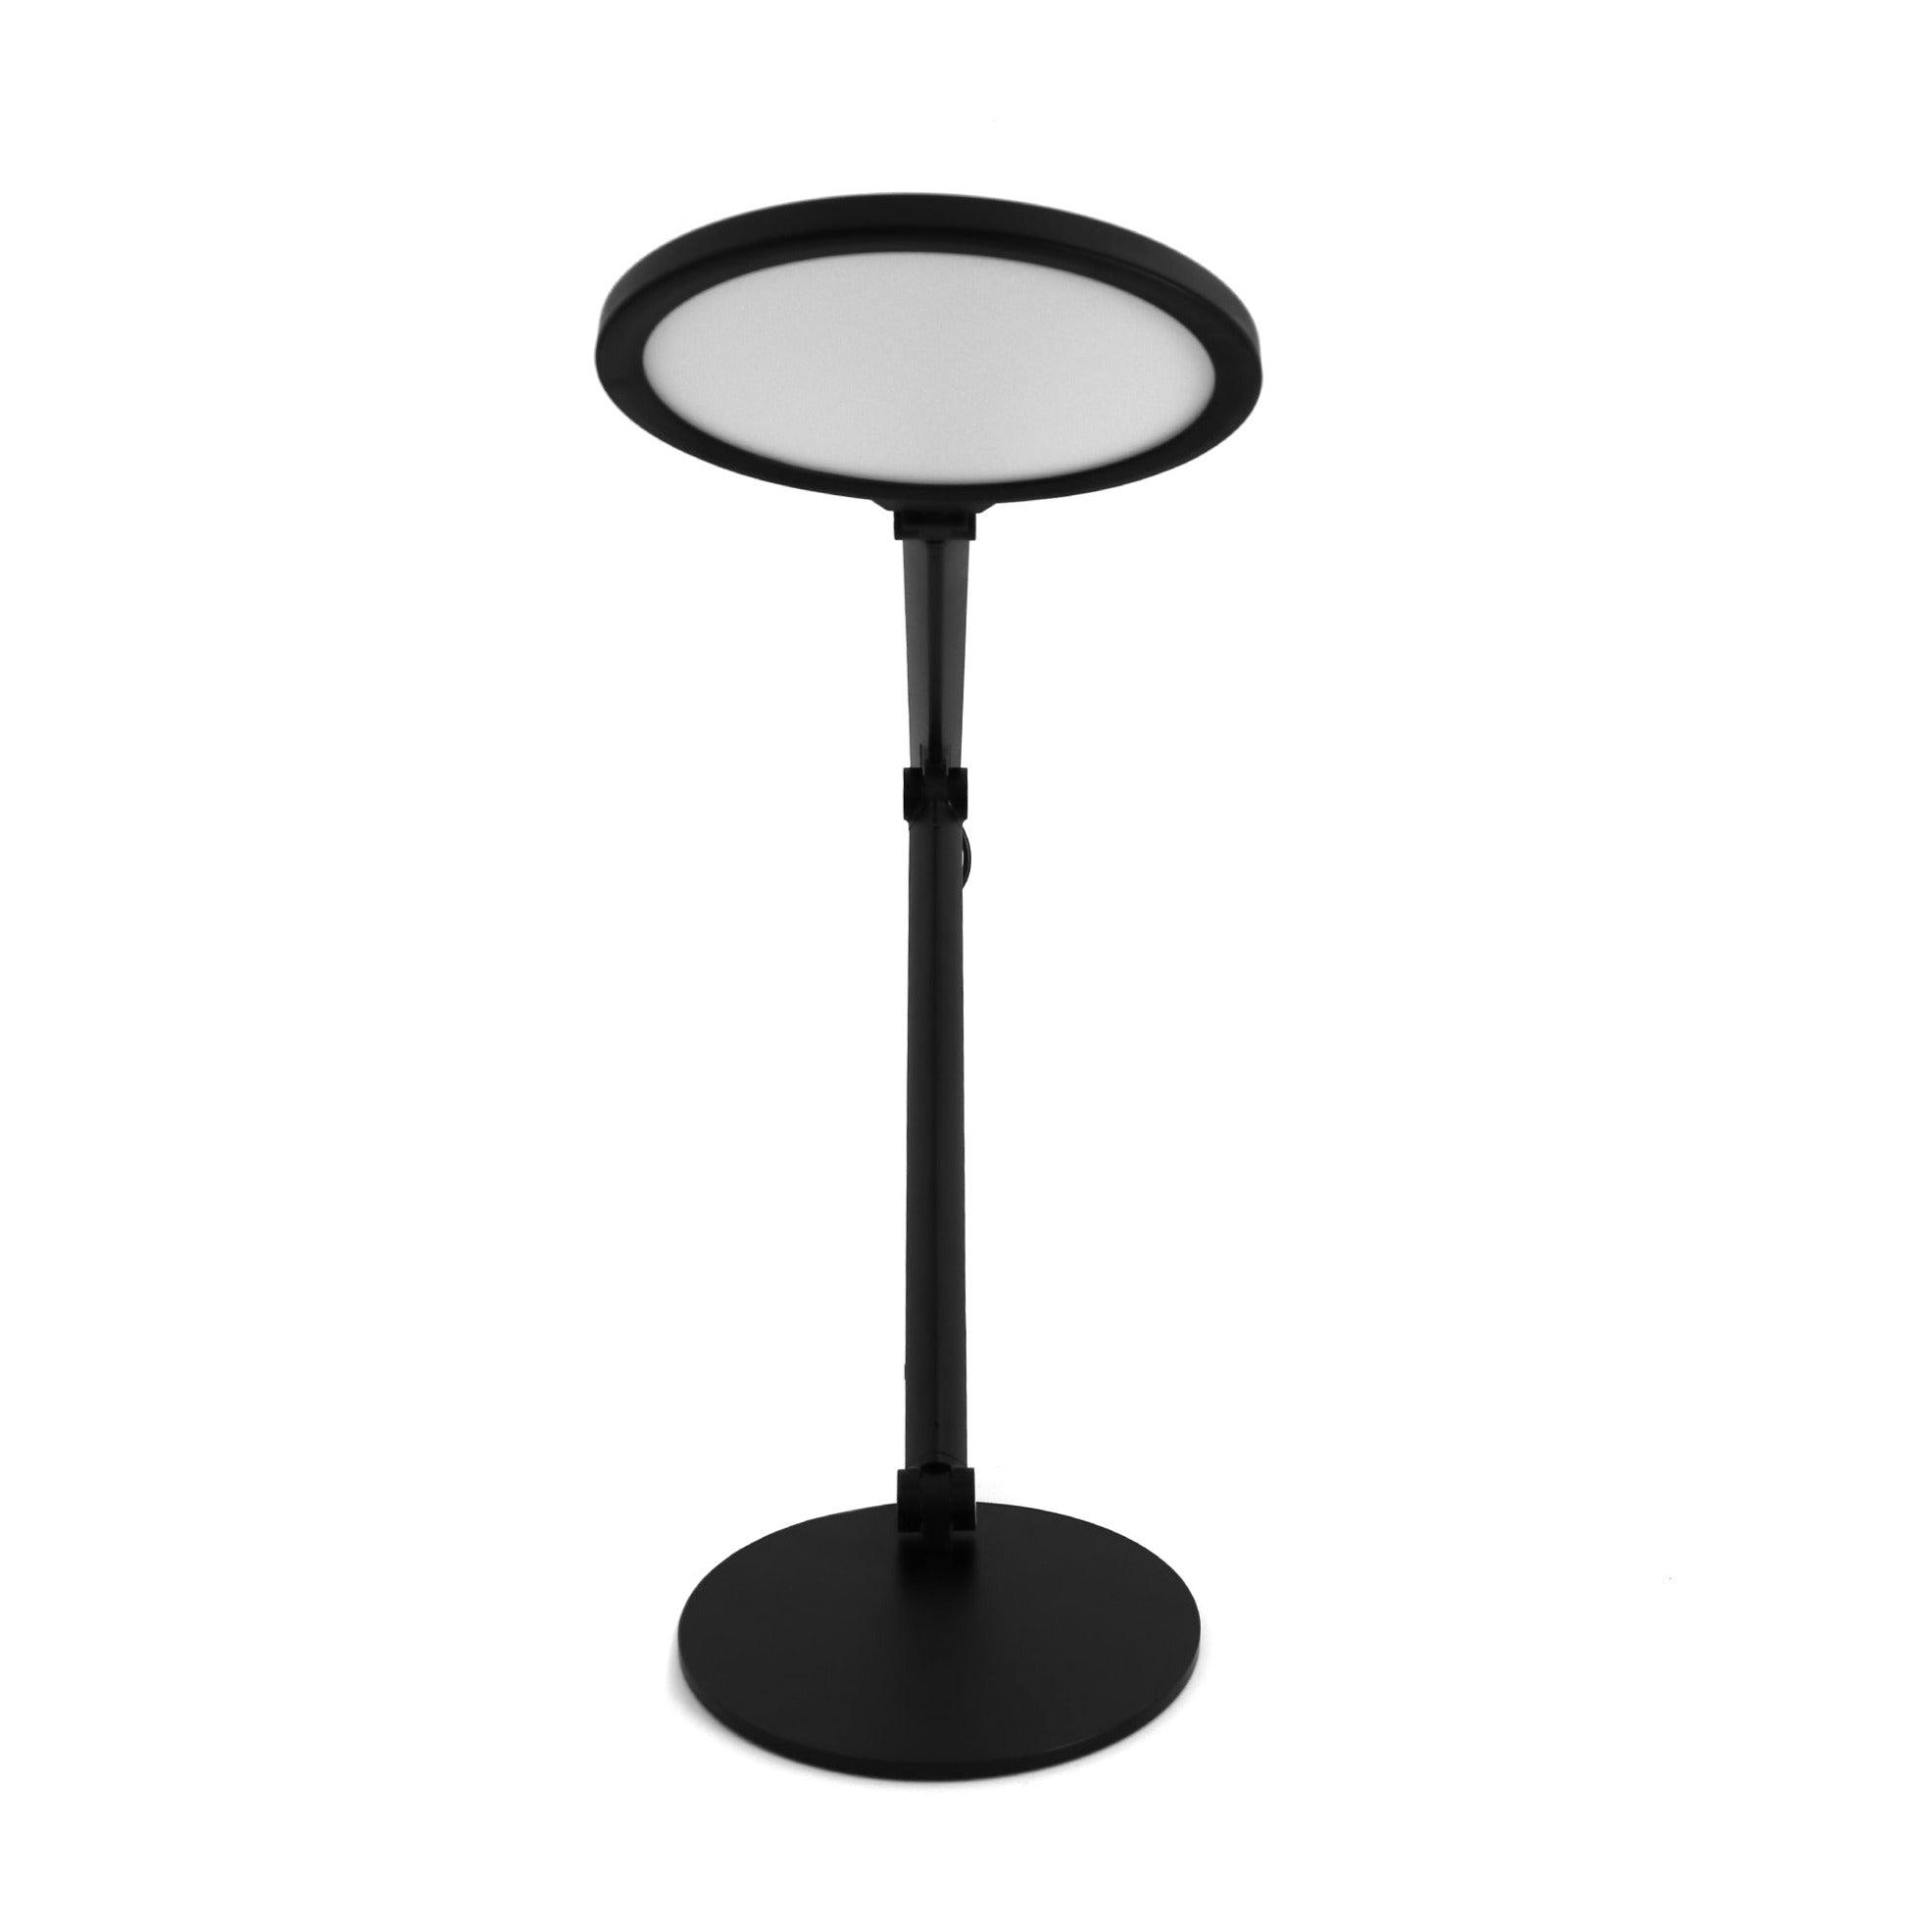 LED Dimmable Long Arm Desk Lamp